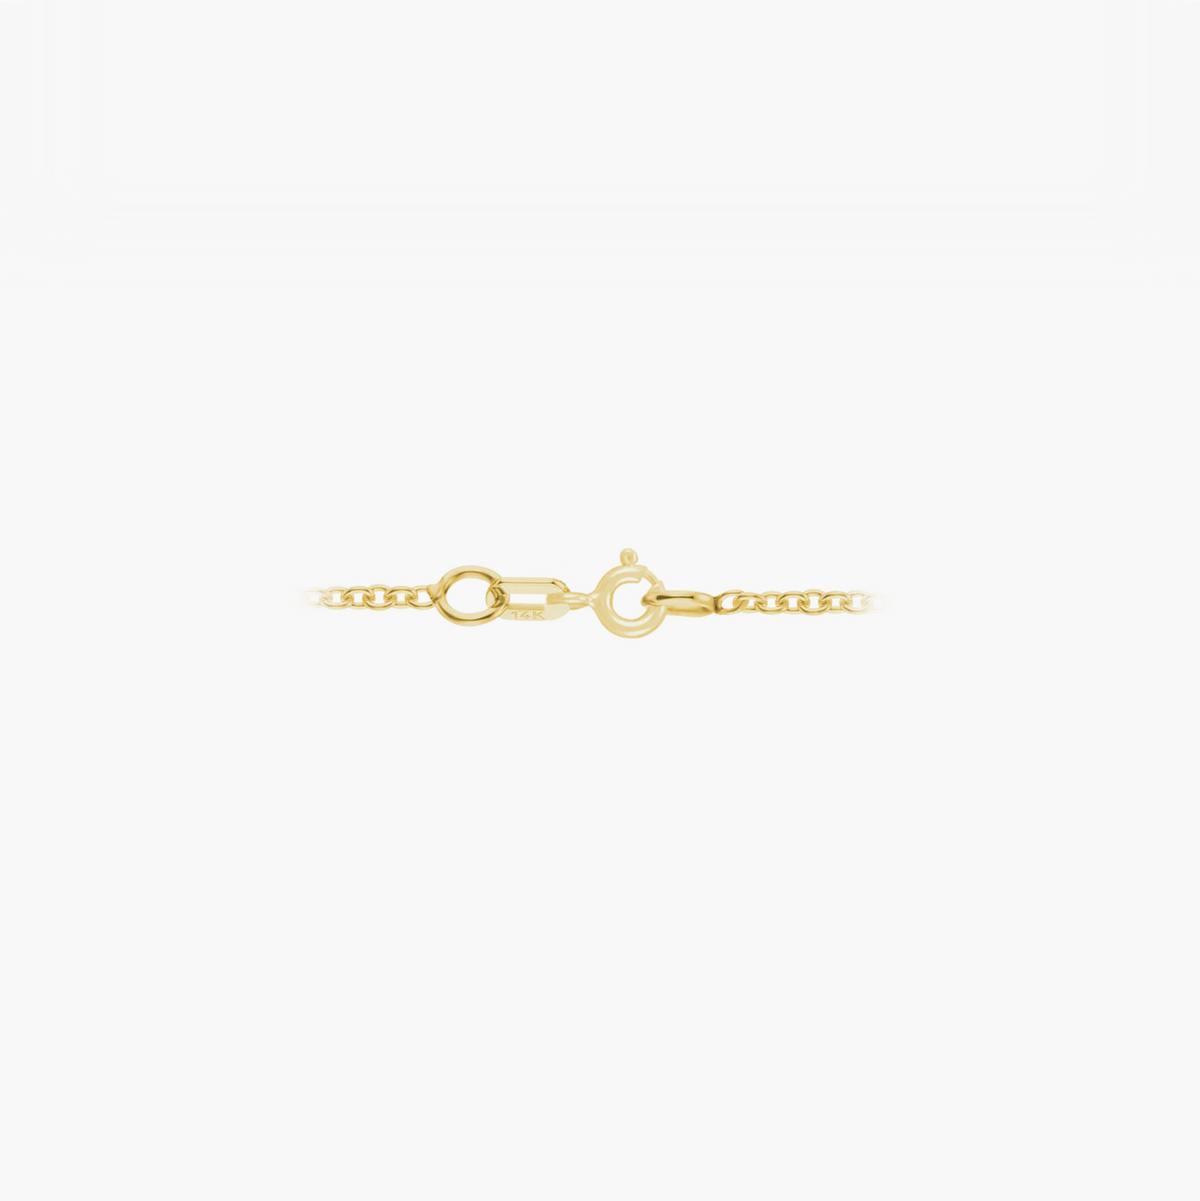 Birthstone Necklace March - Aquamarine 14K Gold Necklace